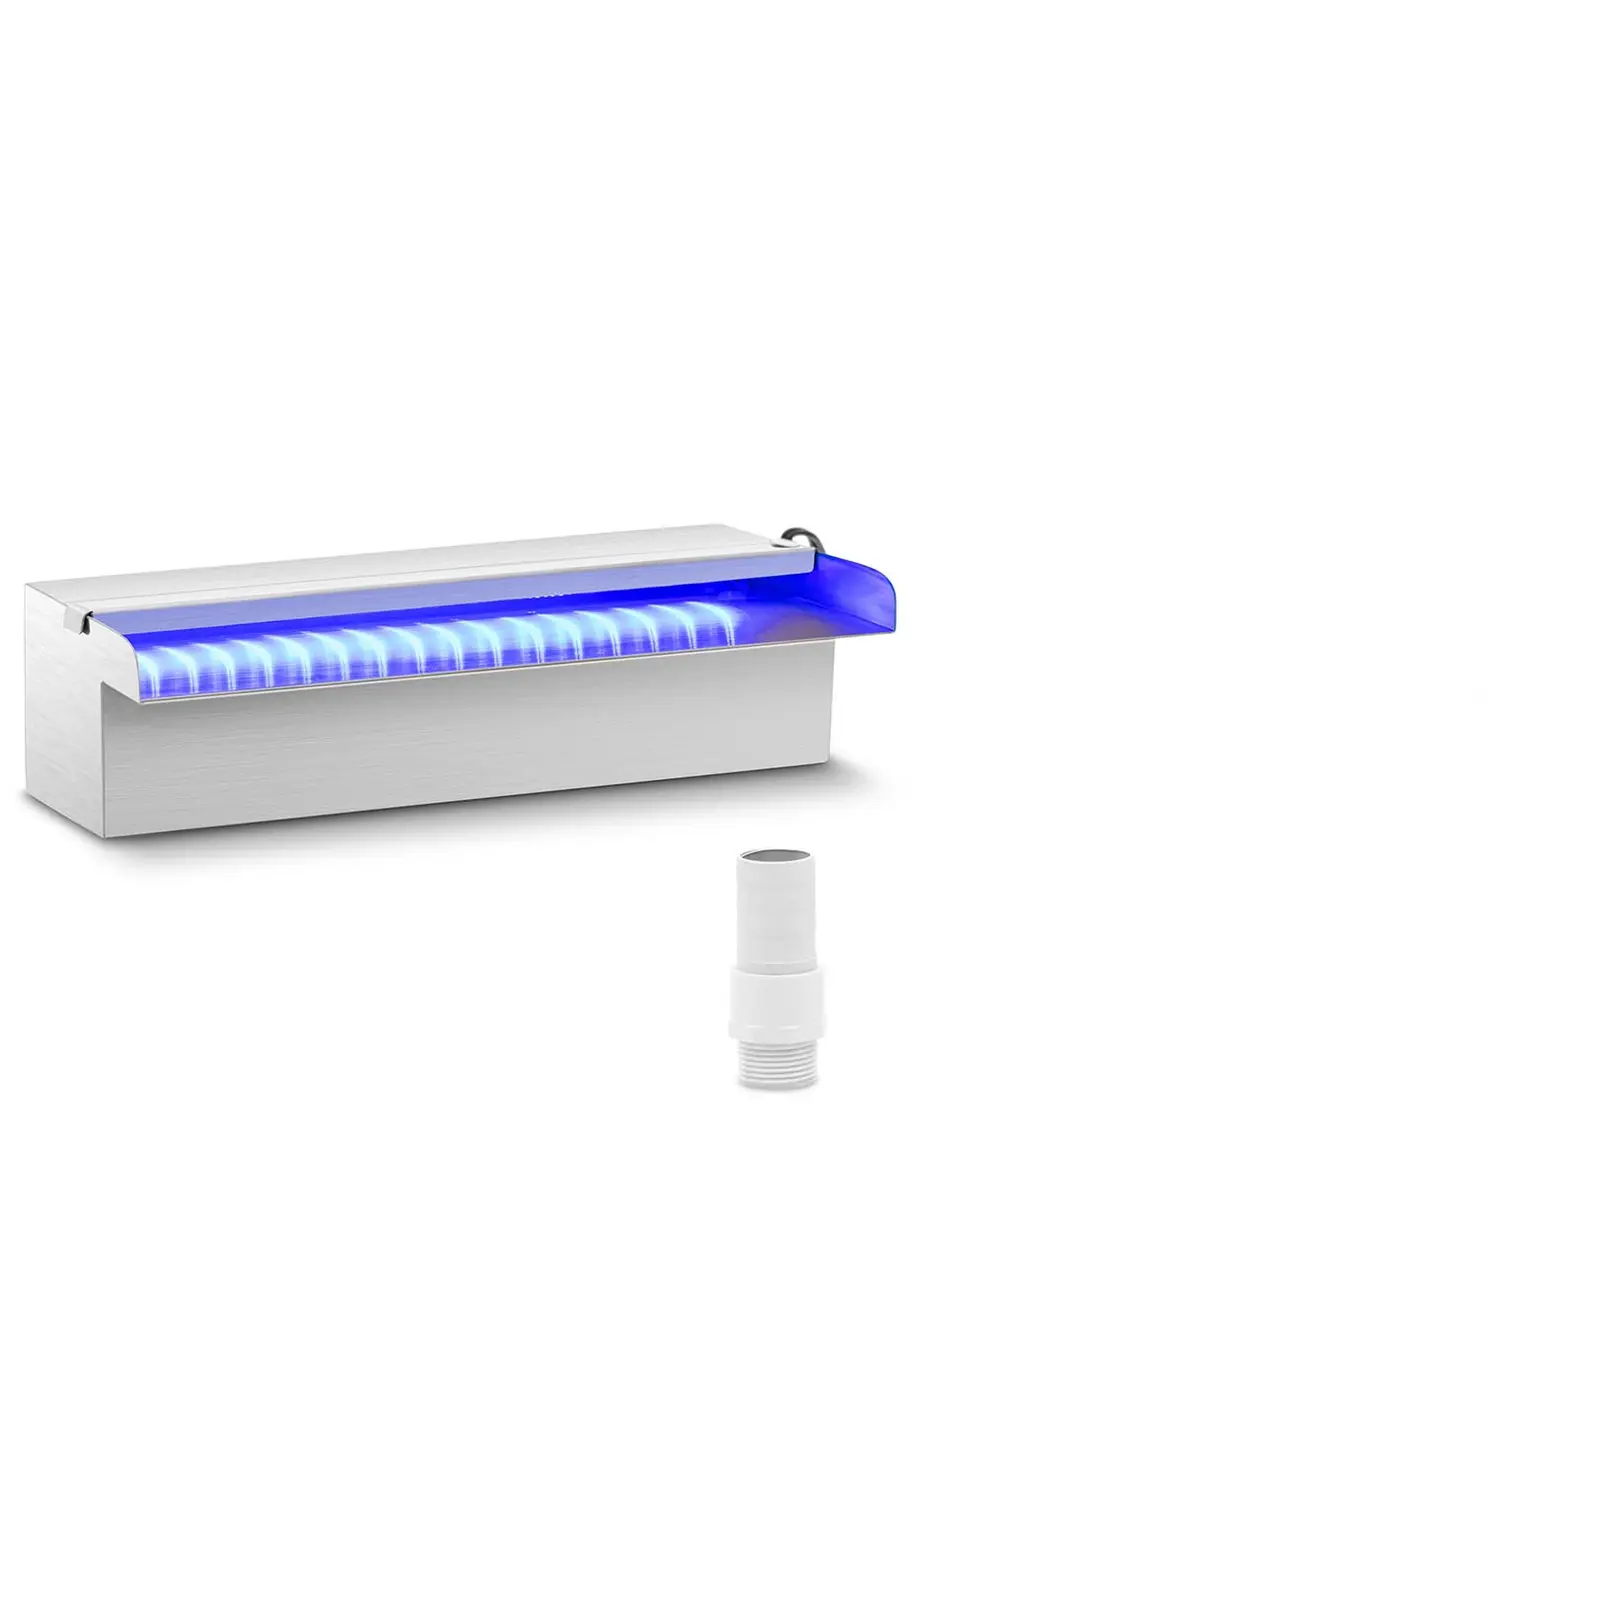 Schwalldusche - 30 cm - LED-Beleuchtung - Blau / Weiß